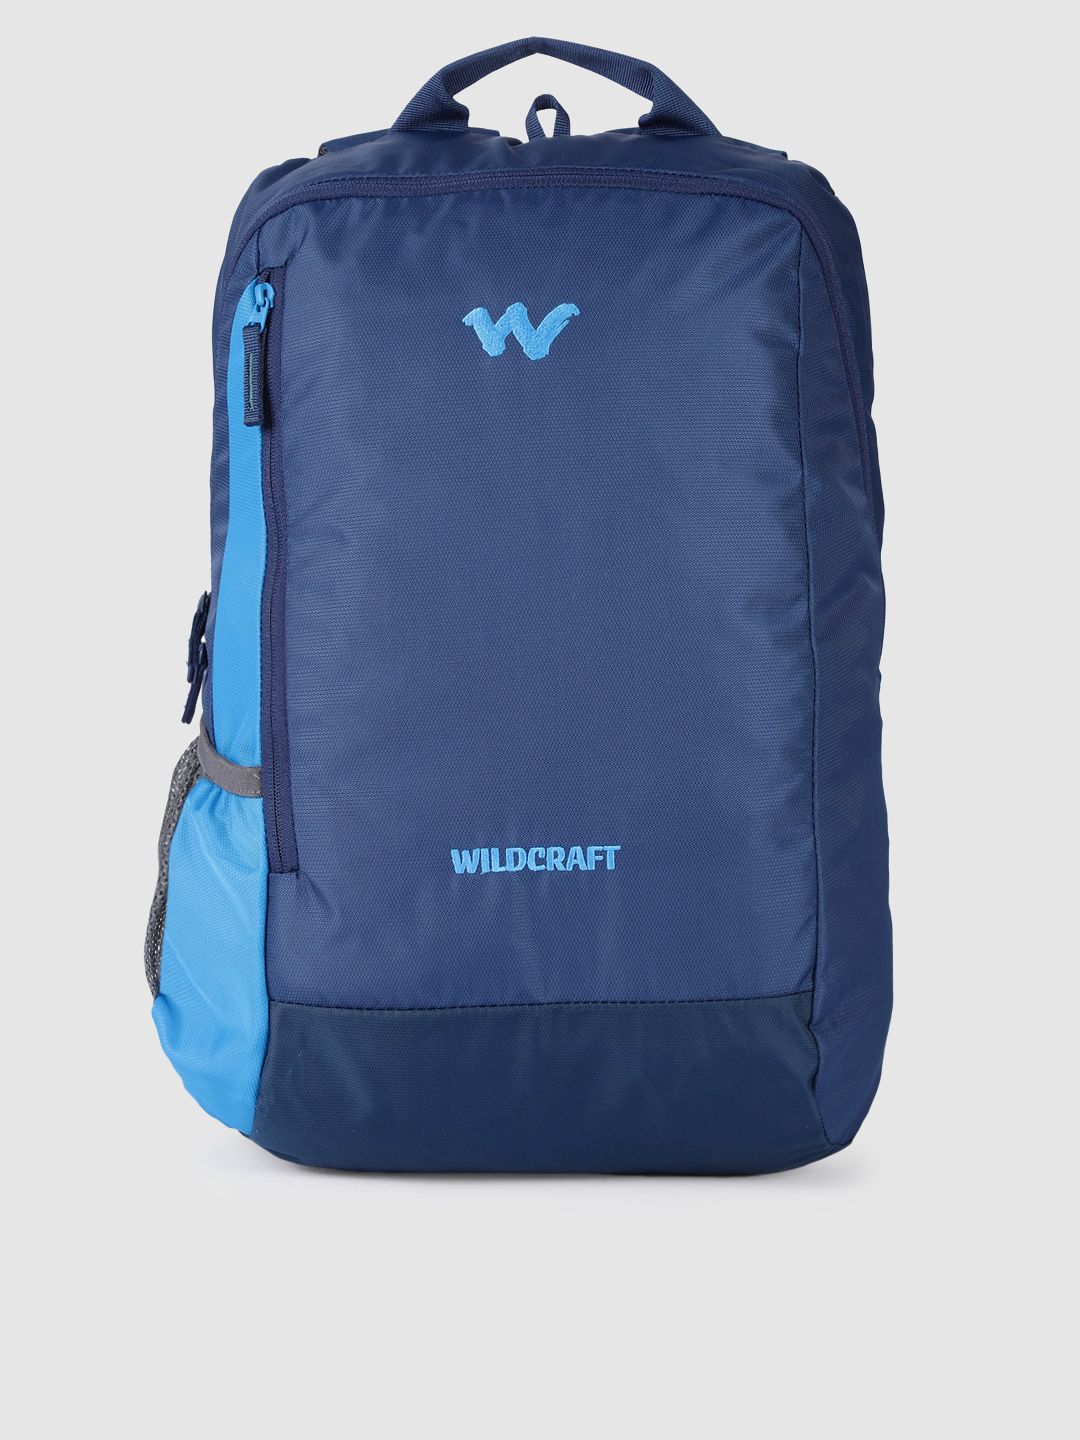 Wildcraft Unisex Blue Streak 1.0 Solid Backpack Price in India